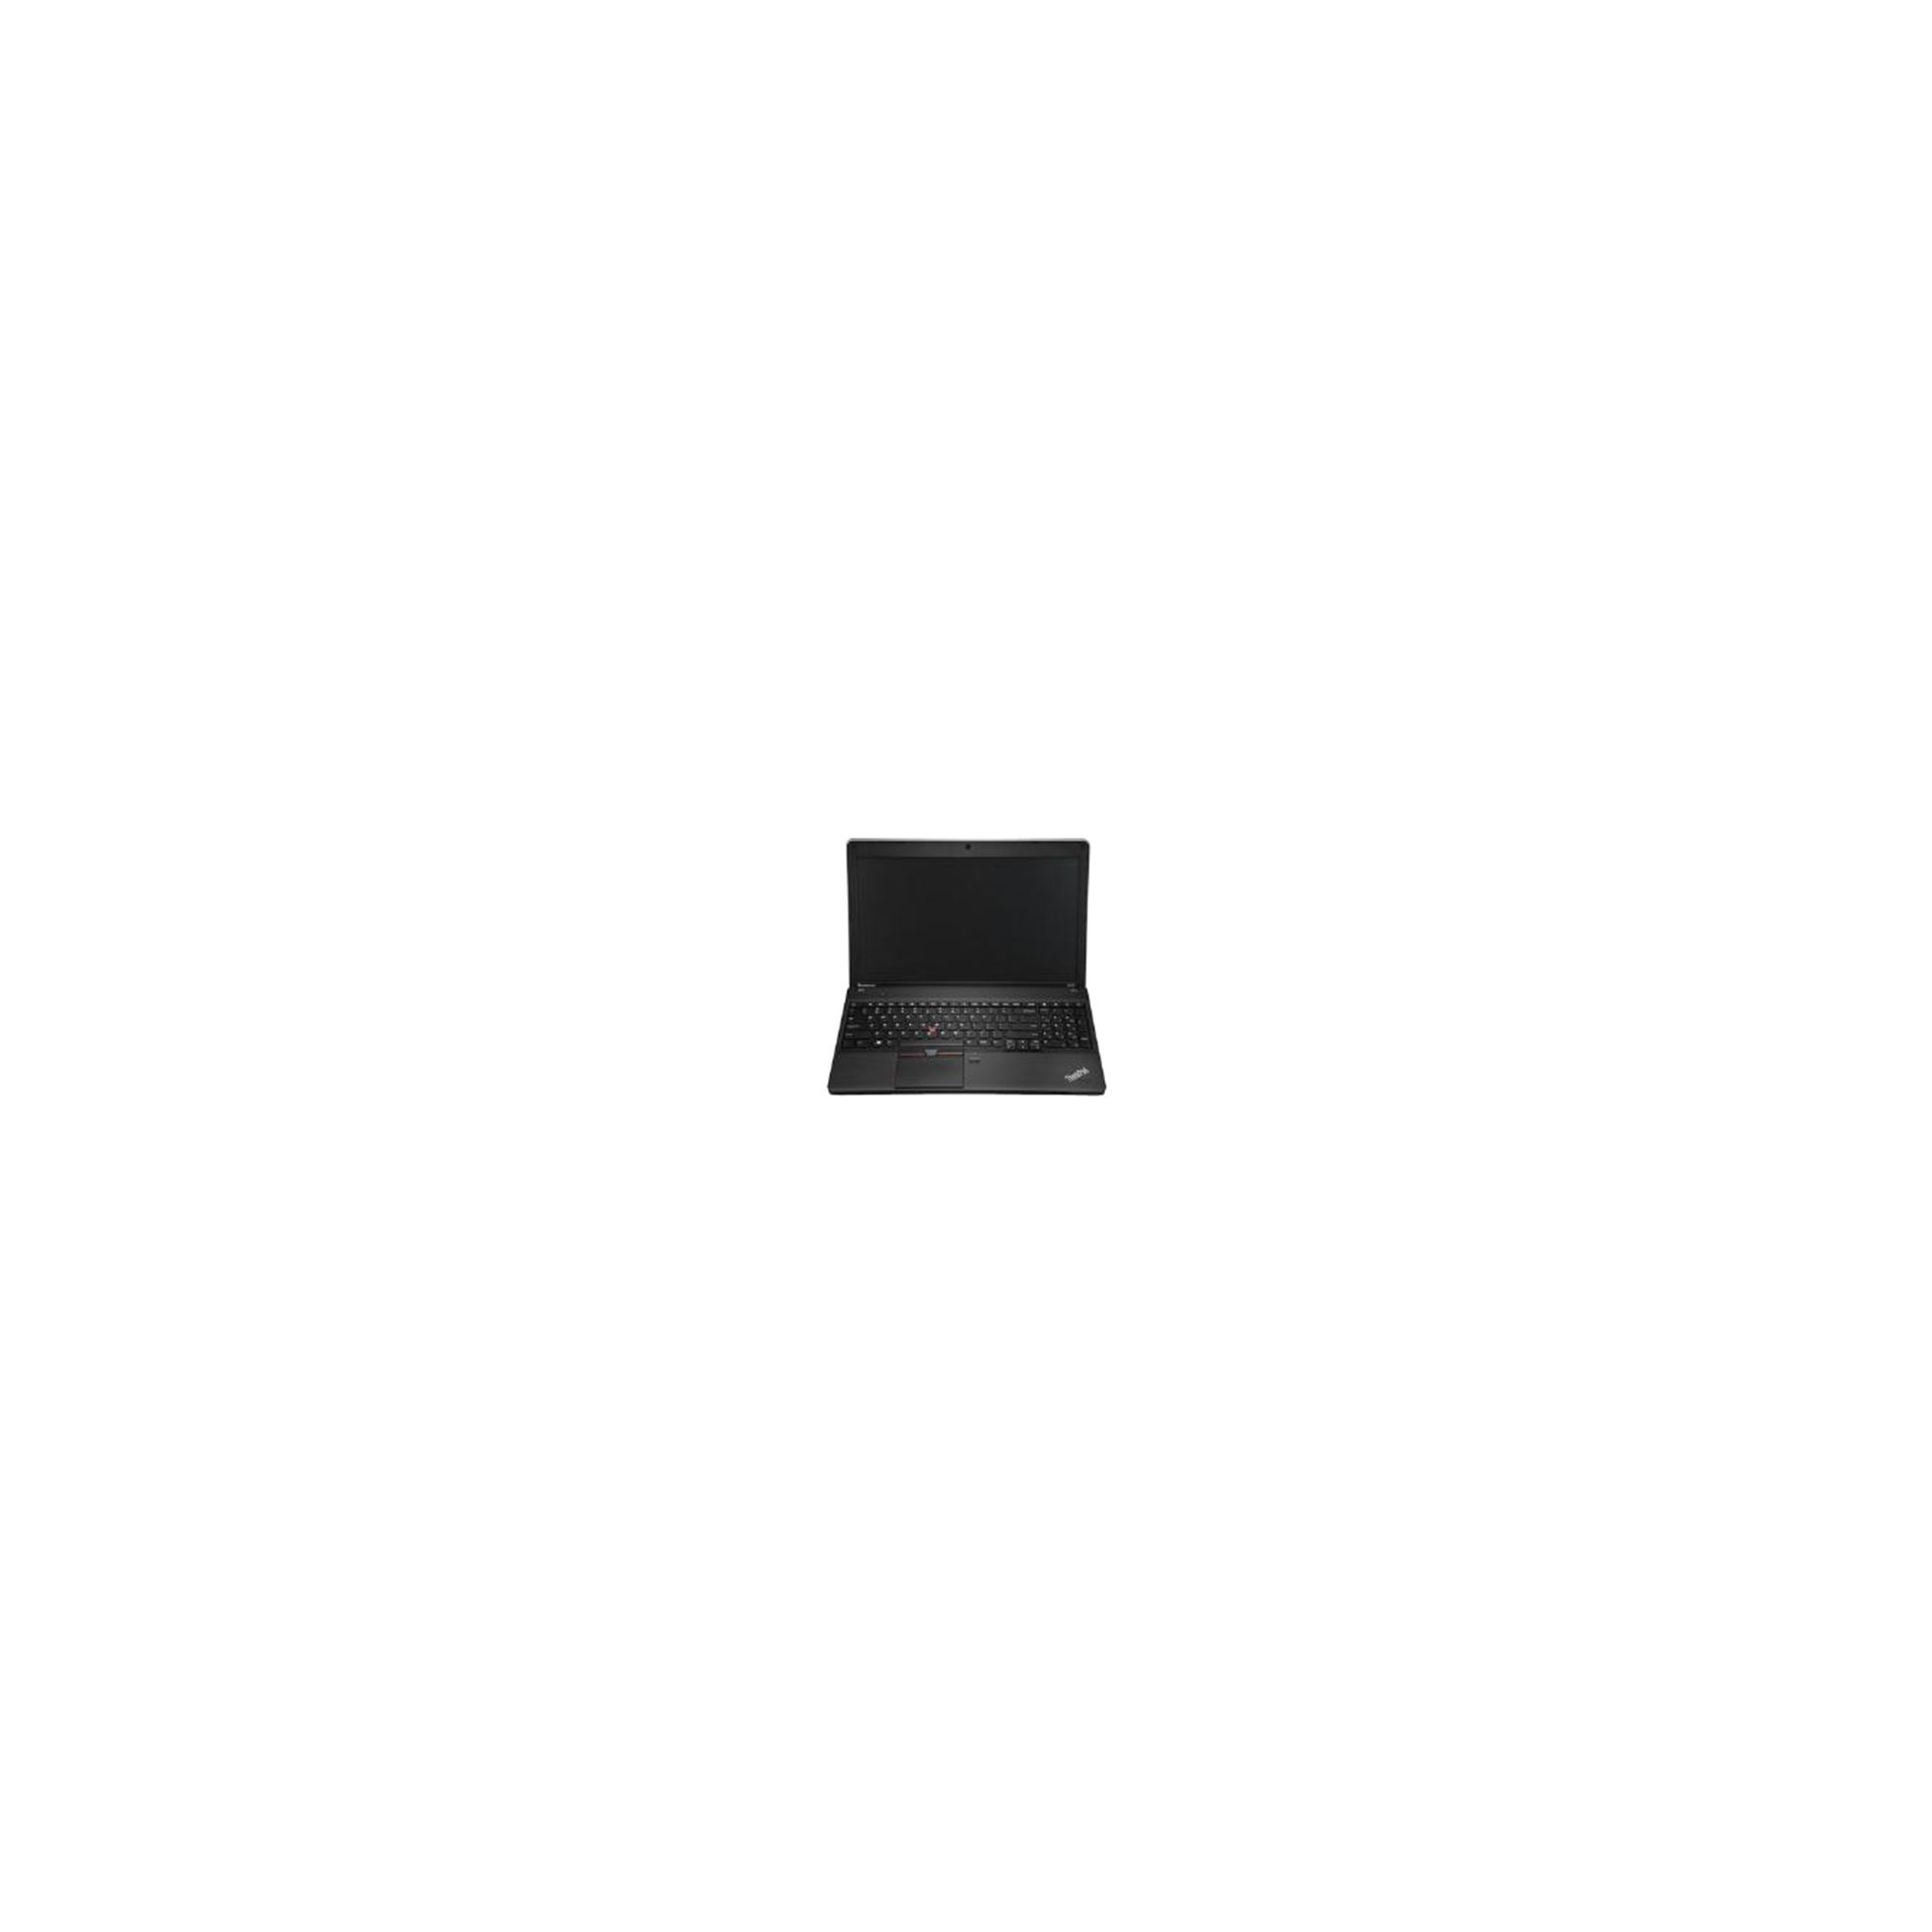 Lenovo ThinkPad Edge E530 3259M9G (15.6 inch) Notebook Core i7 (3632QM) 2.2GHz 4GB 500GB DVD±RW WLAN BT Webcam Windows 8 Pro (Intel HD Graphics) Black